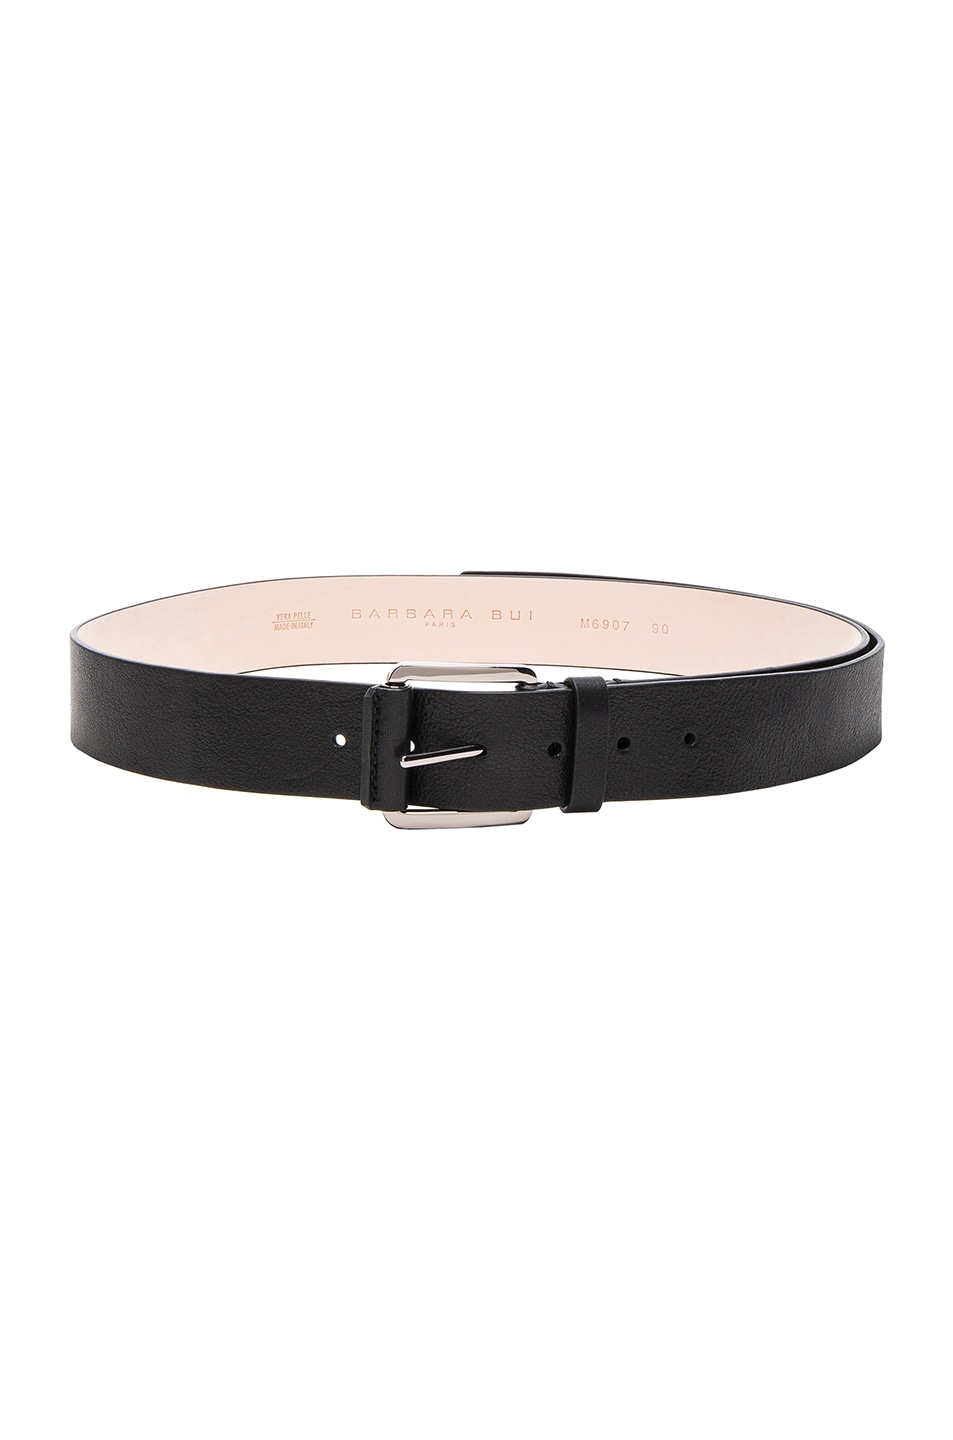 BARBARA BUI Leather Belt in Black | ModeSens